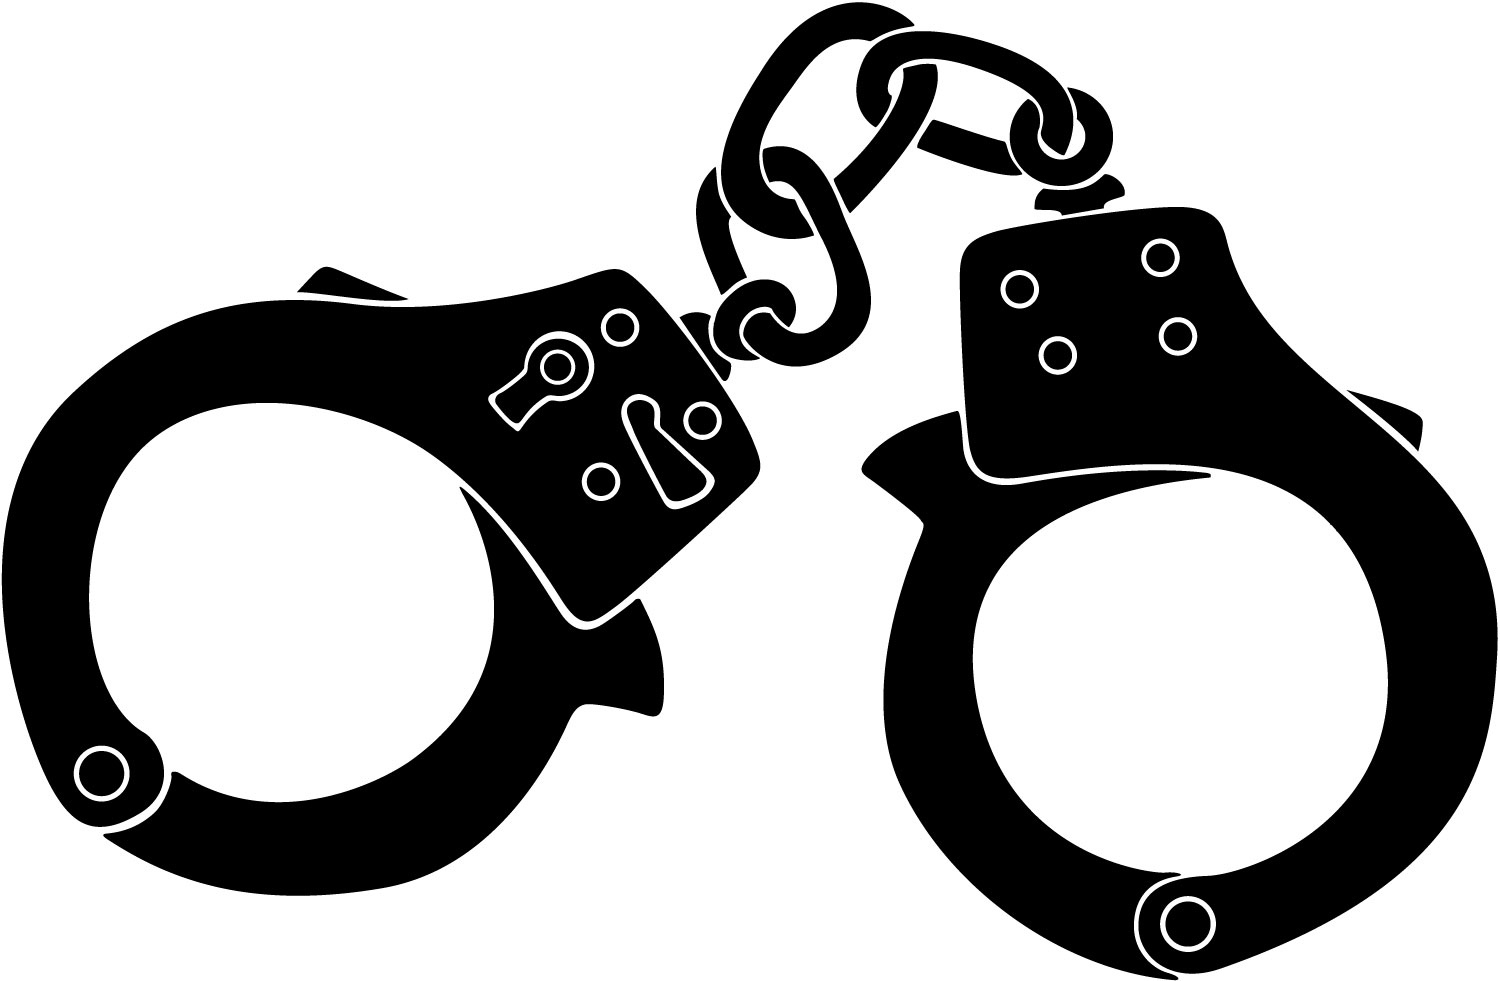 Black and white handcuffs clipart